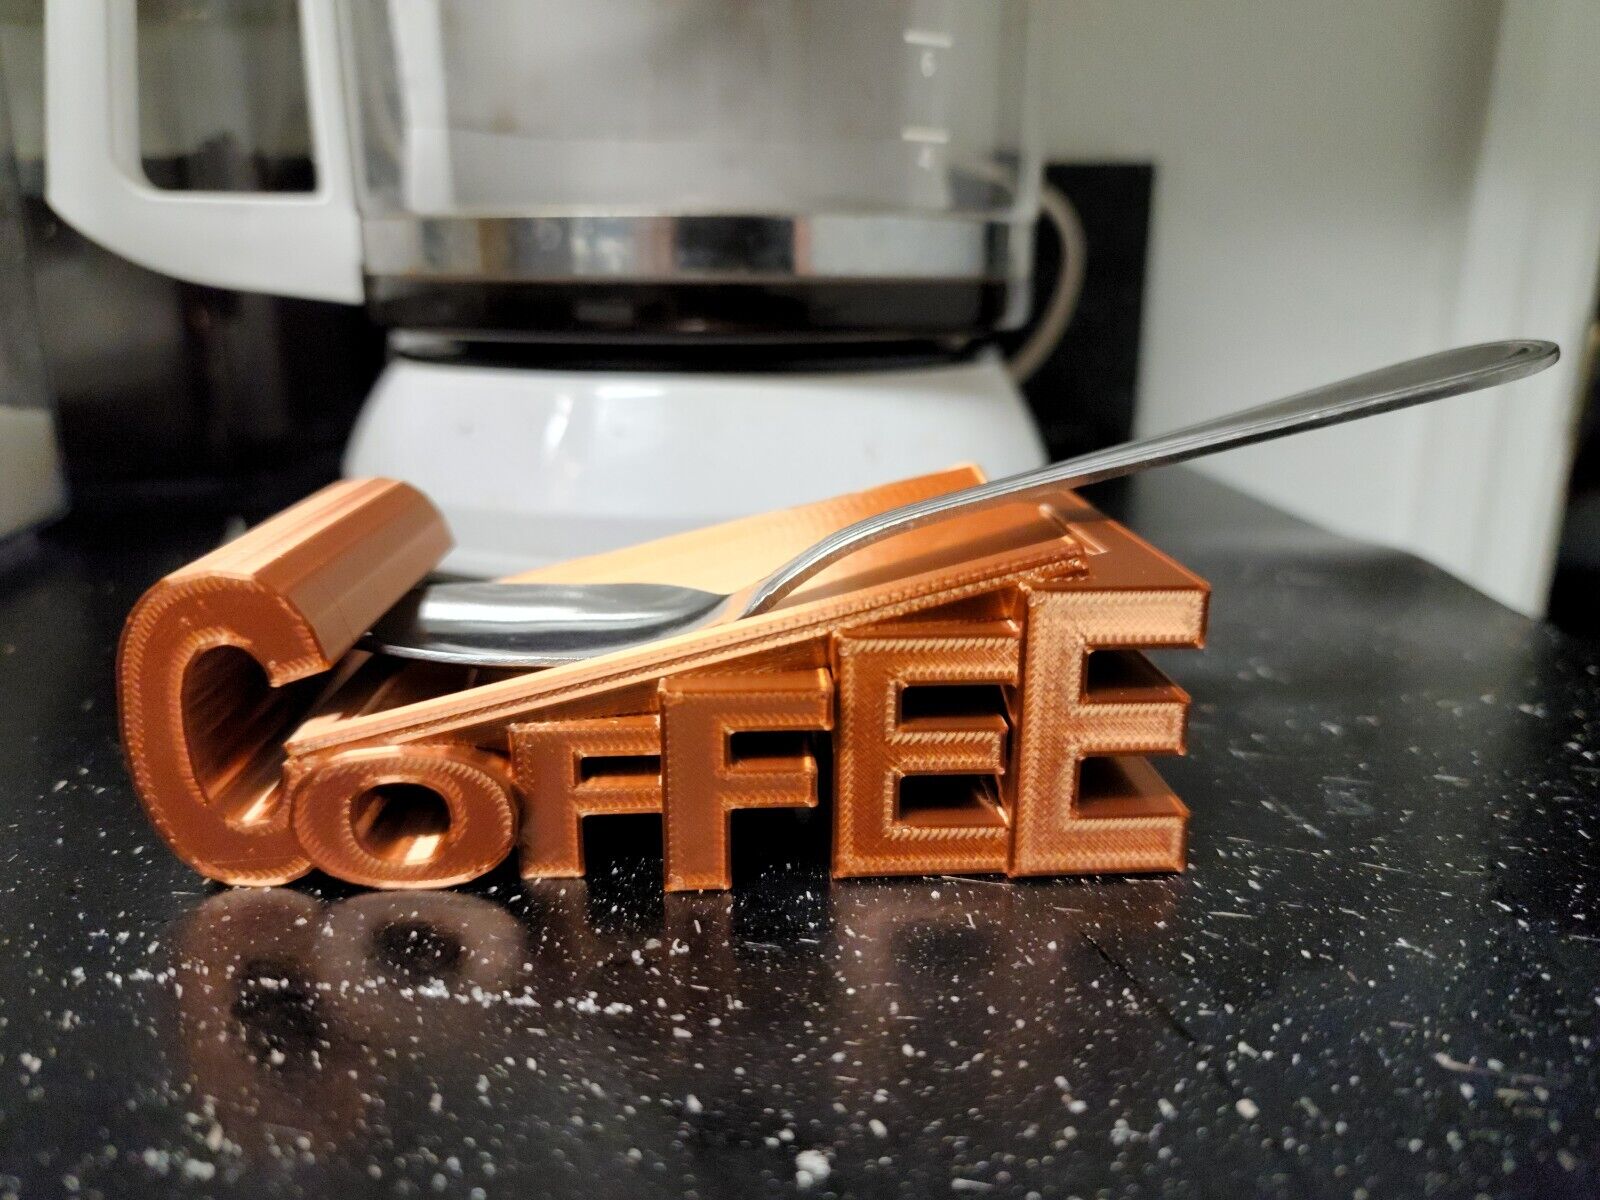 3d printed coffee spoon holder